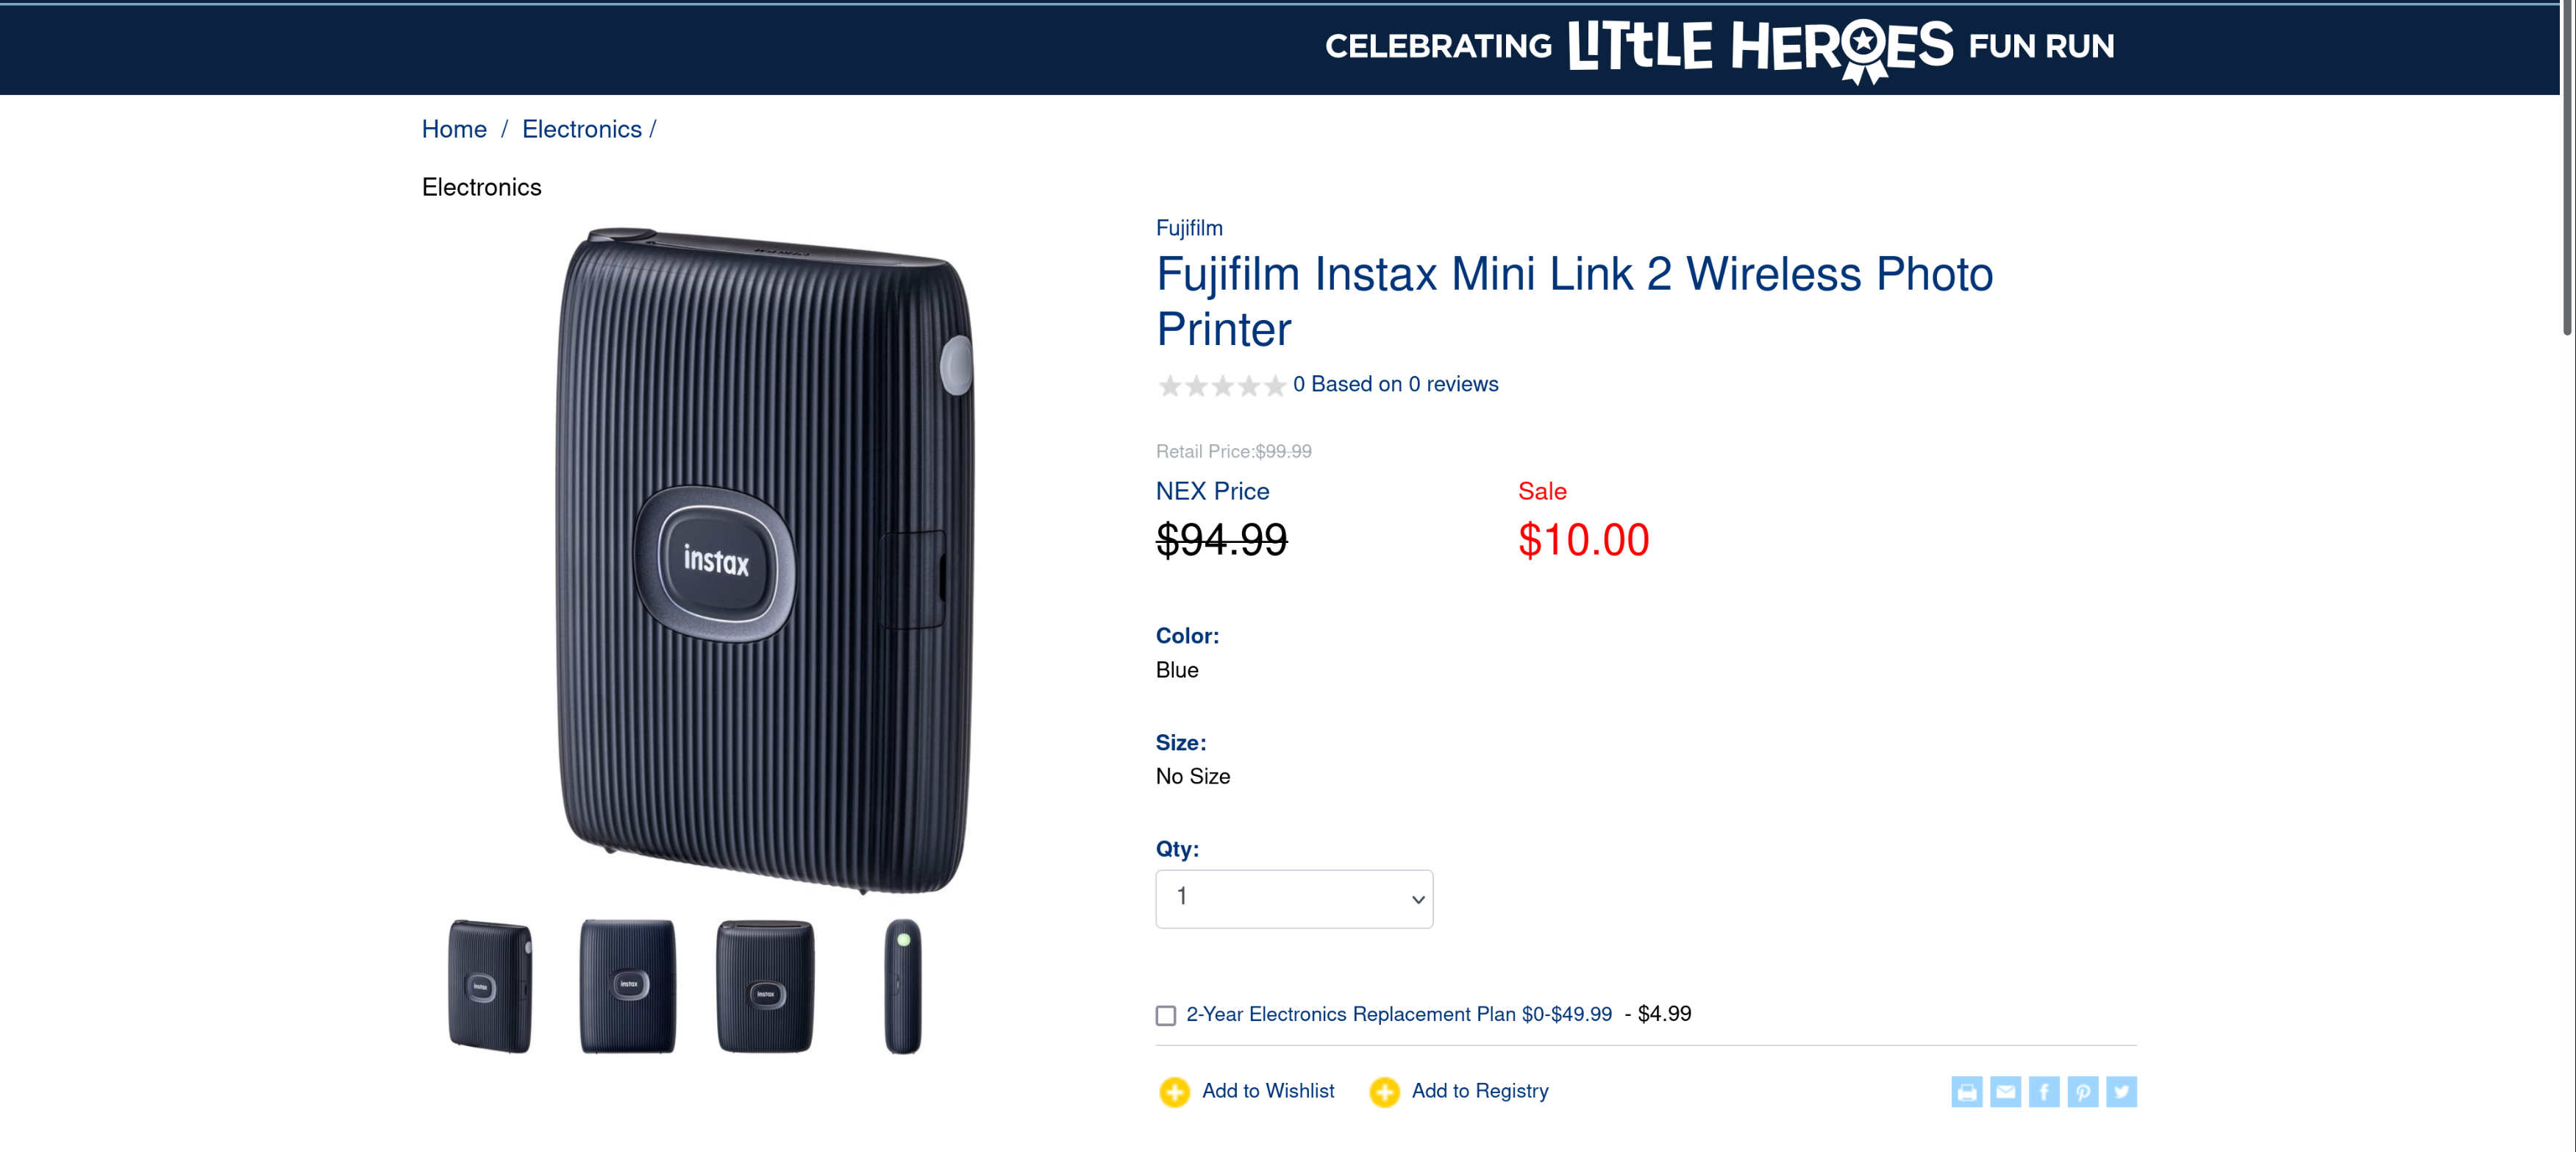 Fujifilm Instax Mini Link 2 Photo Printer on Sale for $10 at US Navy Exchange